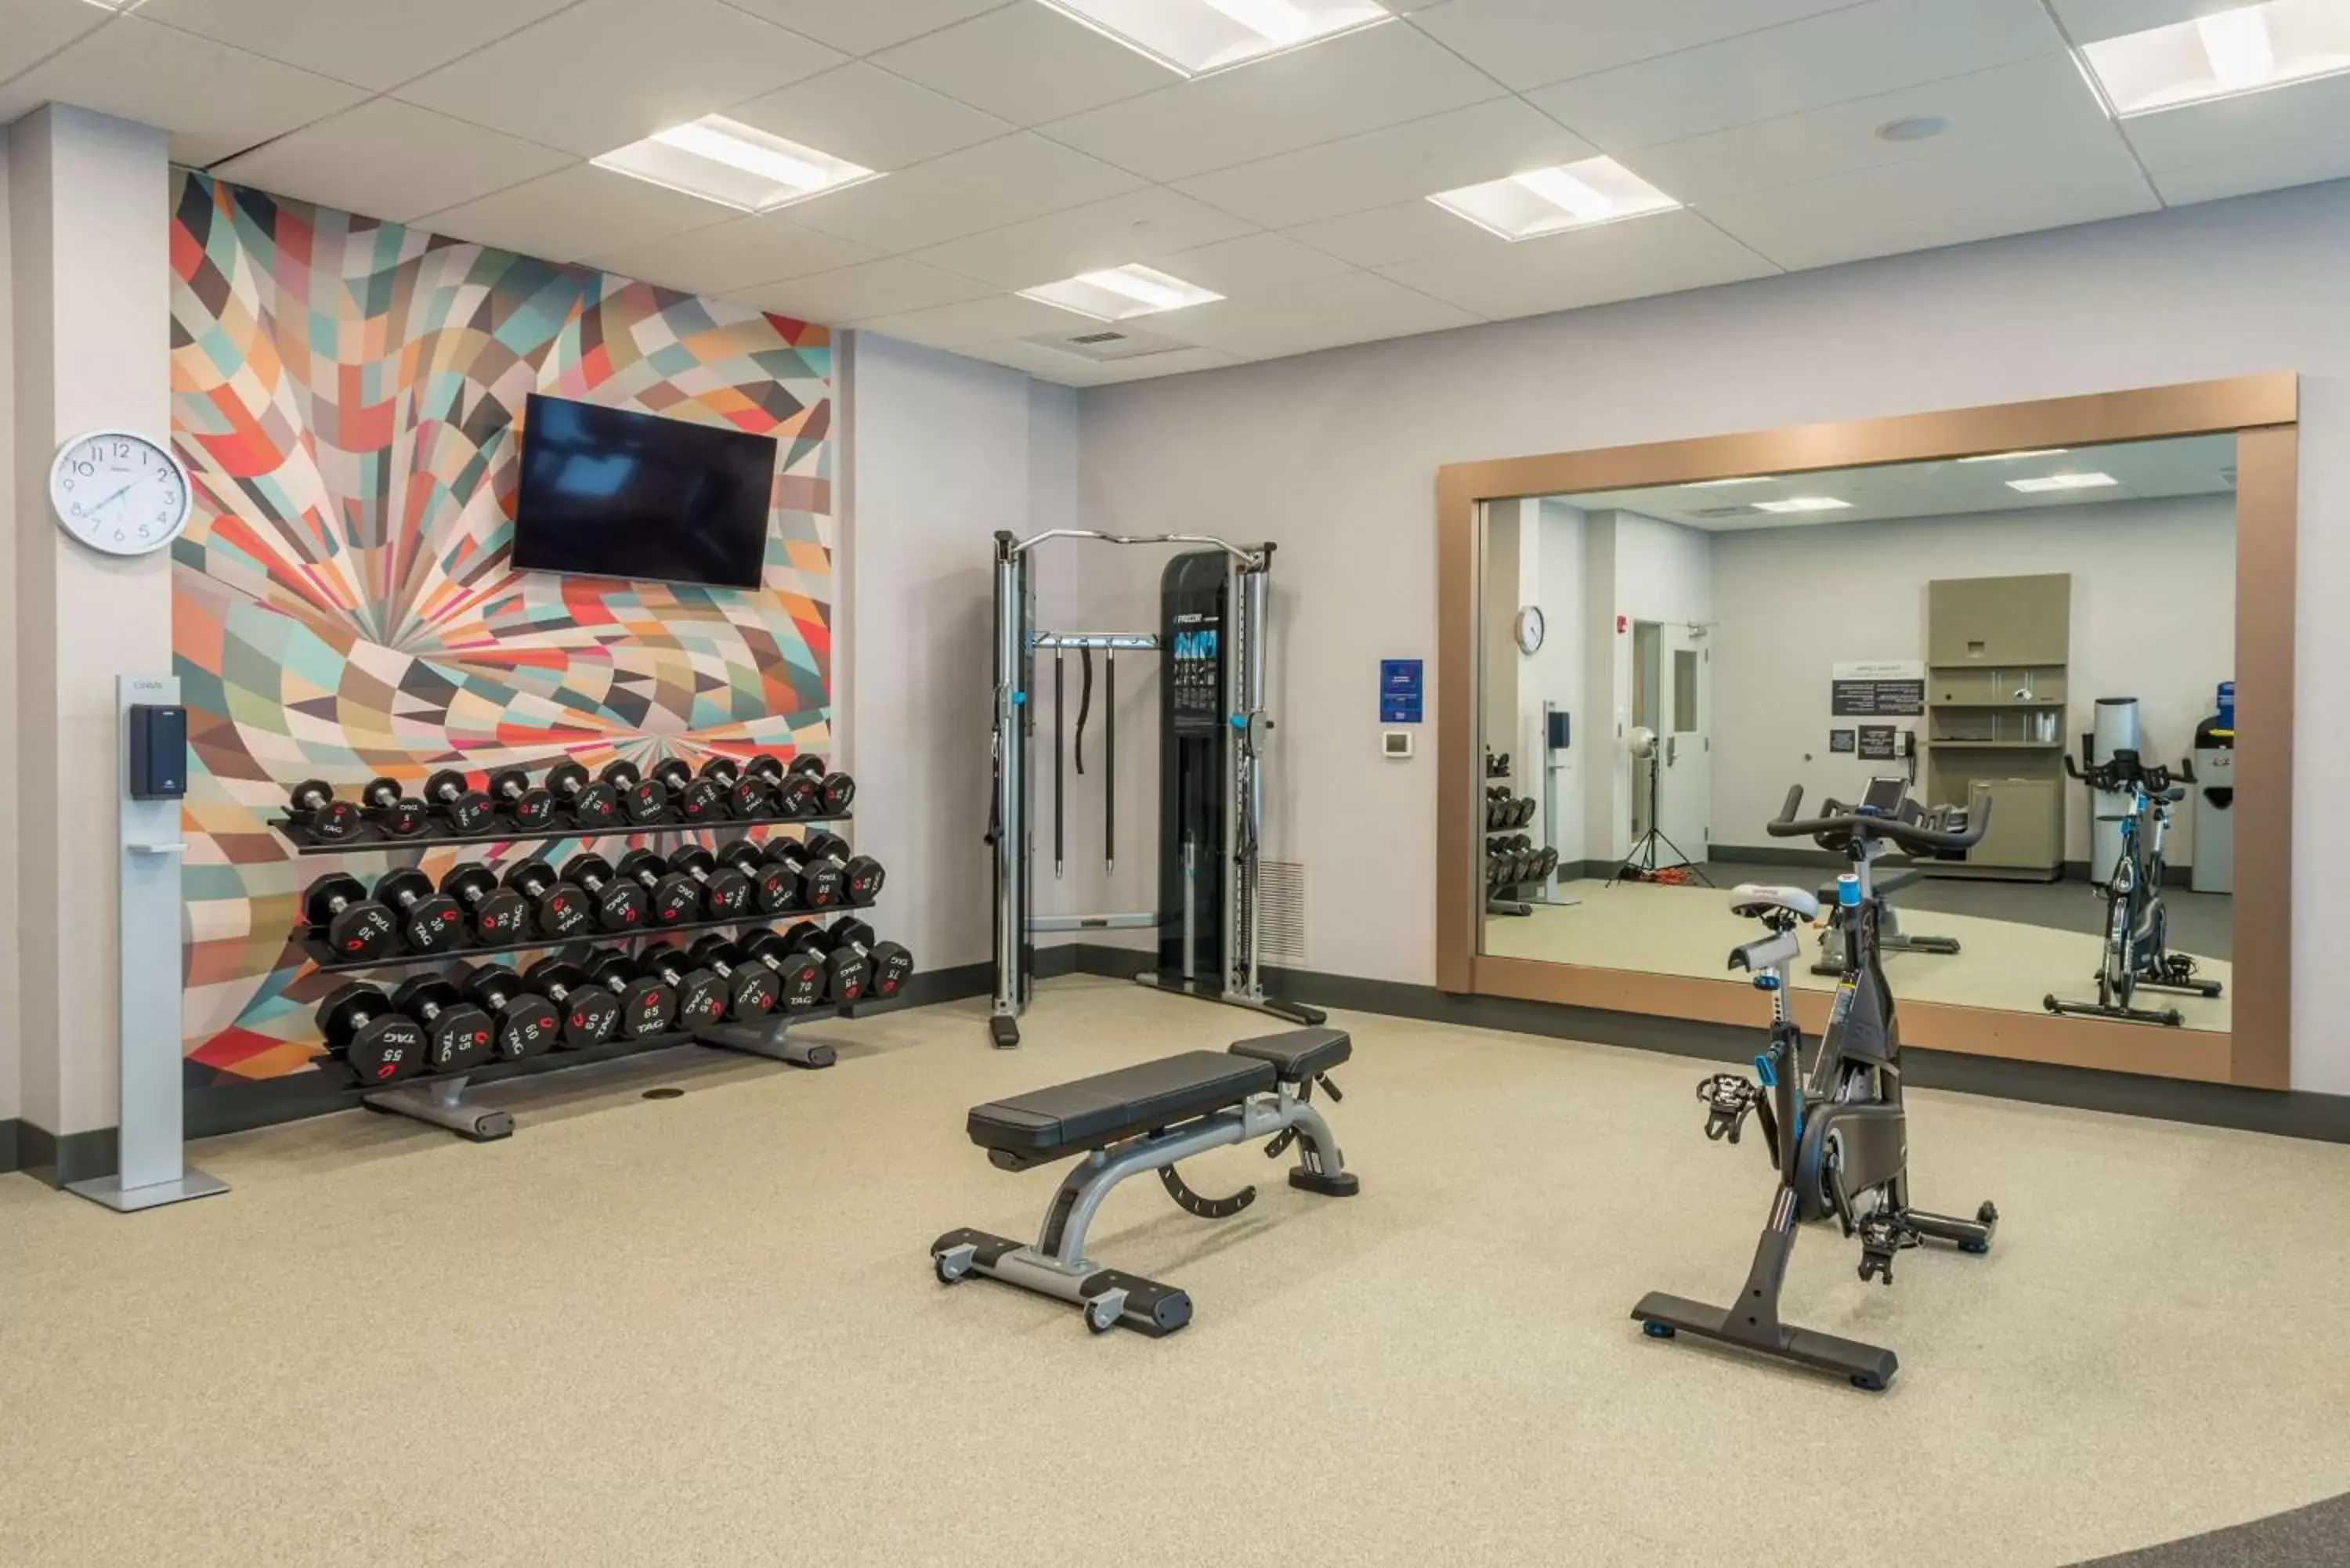 Fitness centre/facilities, Fitness Center/Facilities in Hilton Garden Inn Memphis East/Germantown, Tn